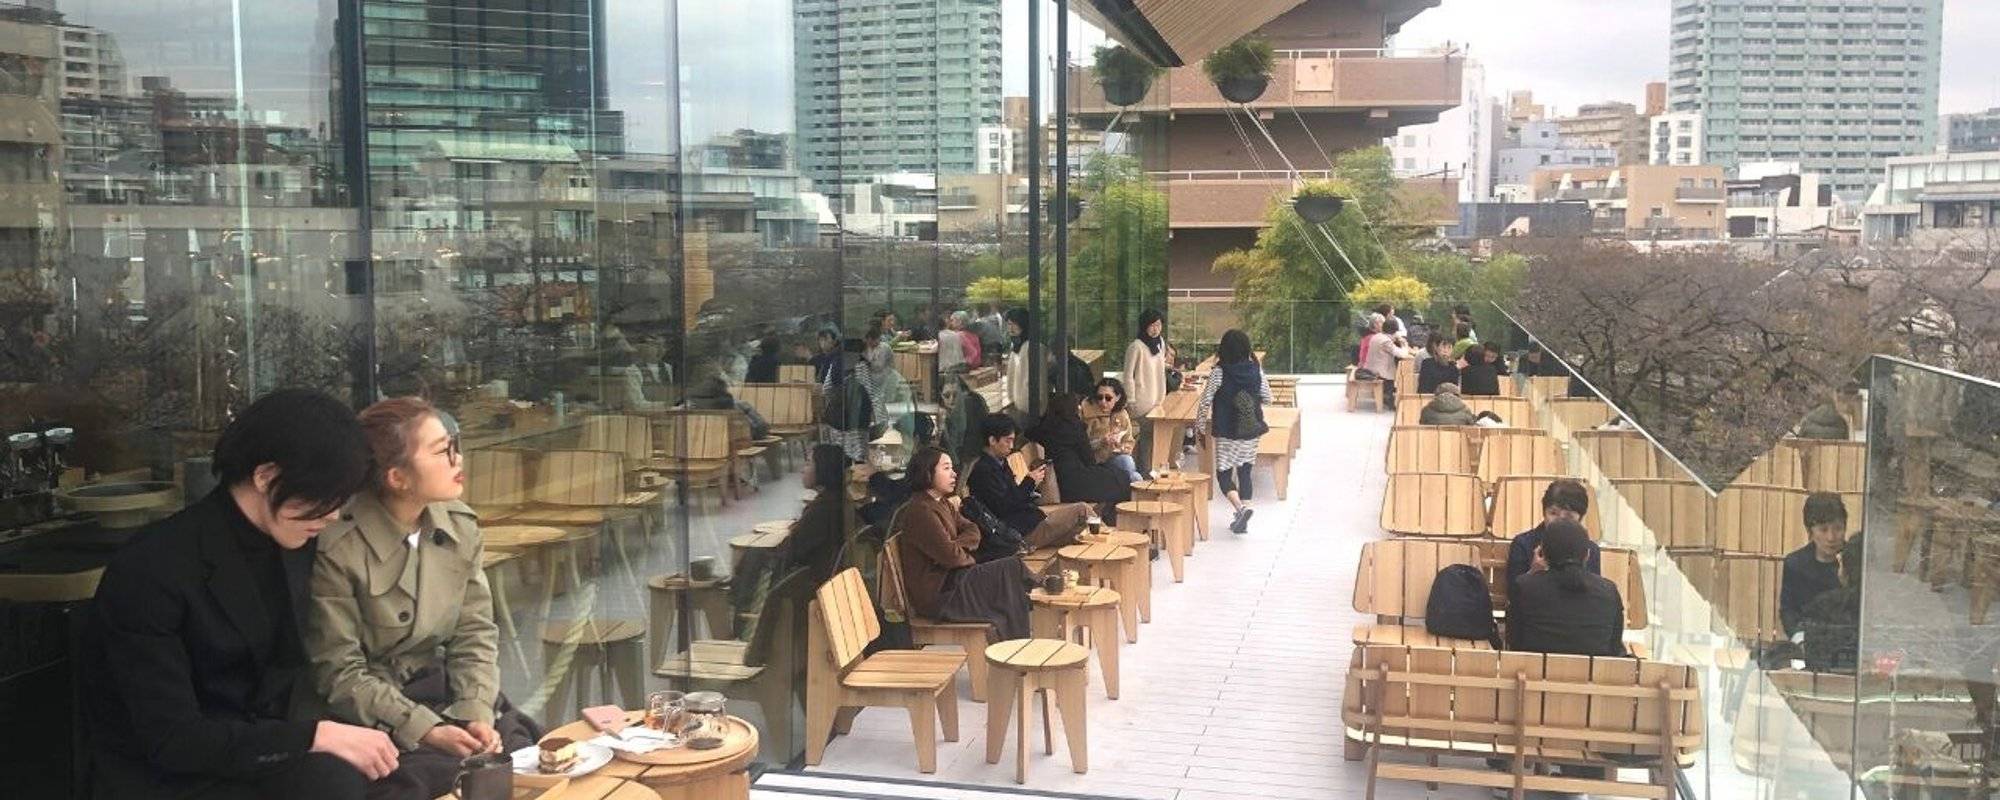 Traveling the World #183 - Starbucks Reserve Roastery @ Tokyo, Japan (Final)